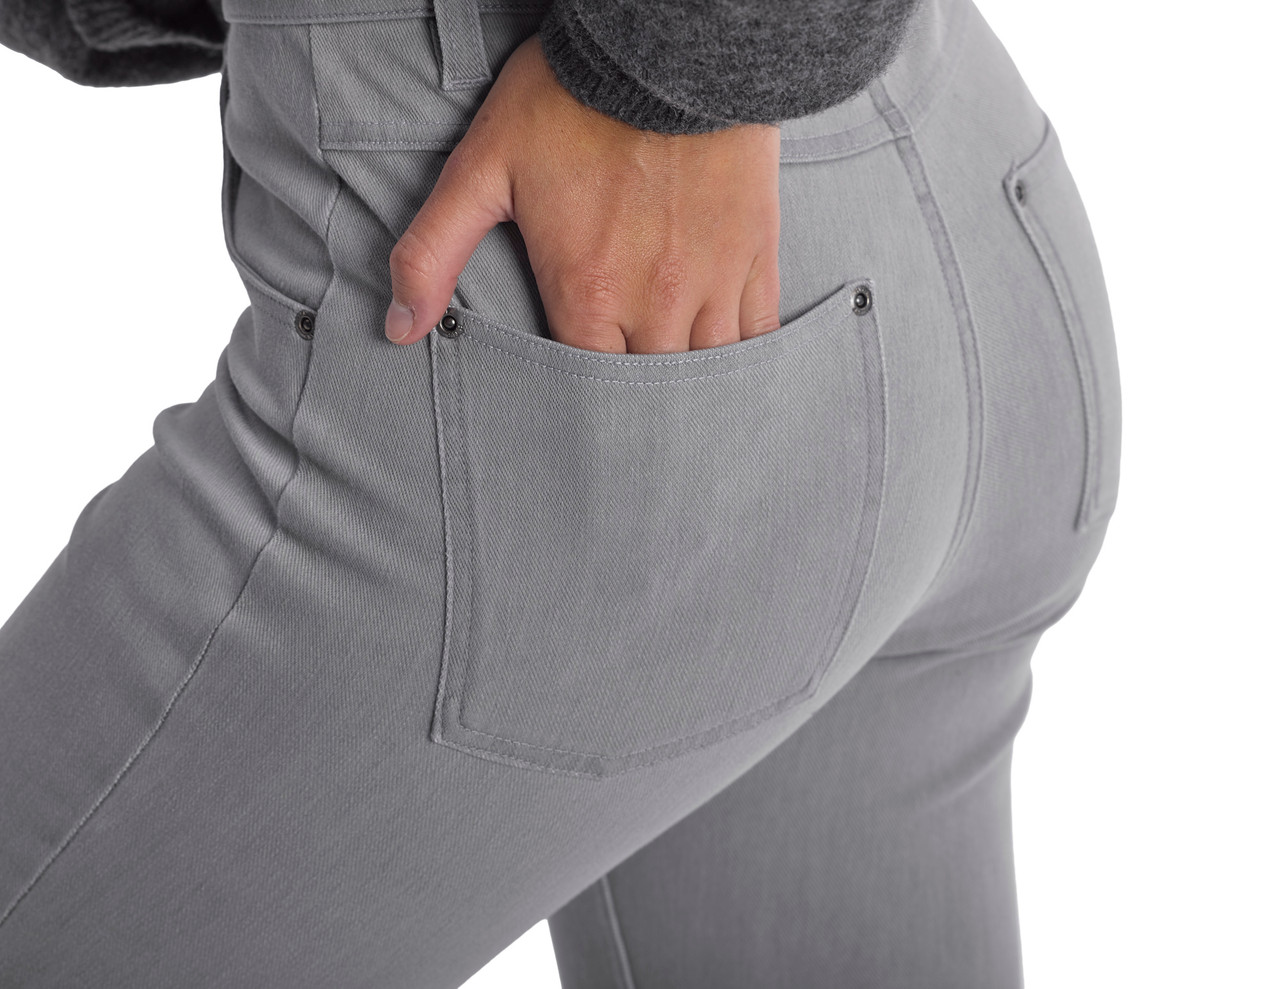 DeanFire Colorful Denim Jeans Print Women Yoga Pants Leggings Push